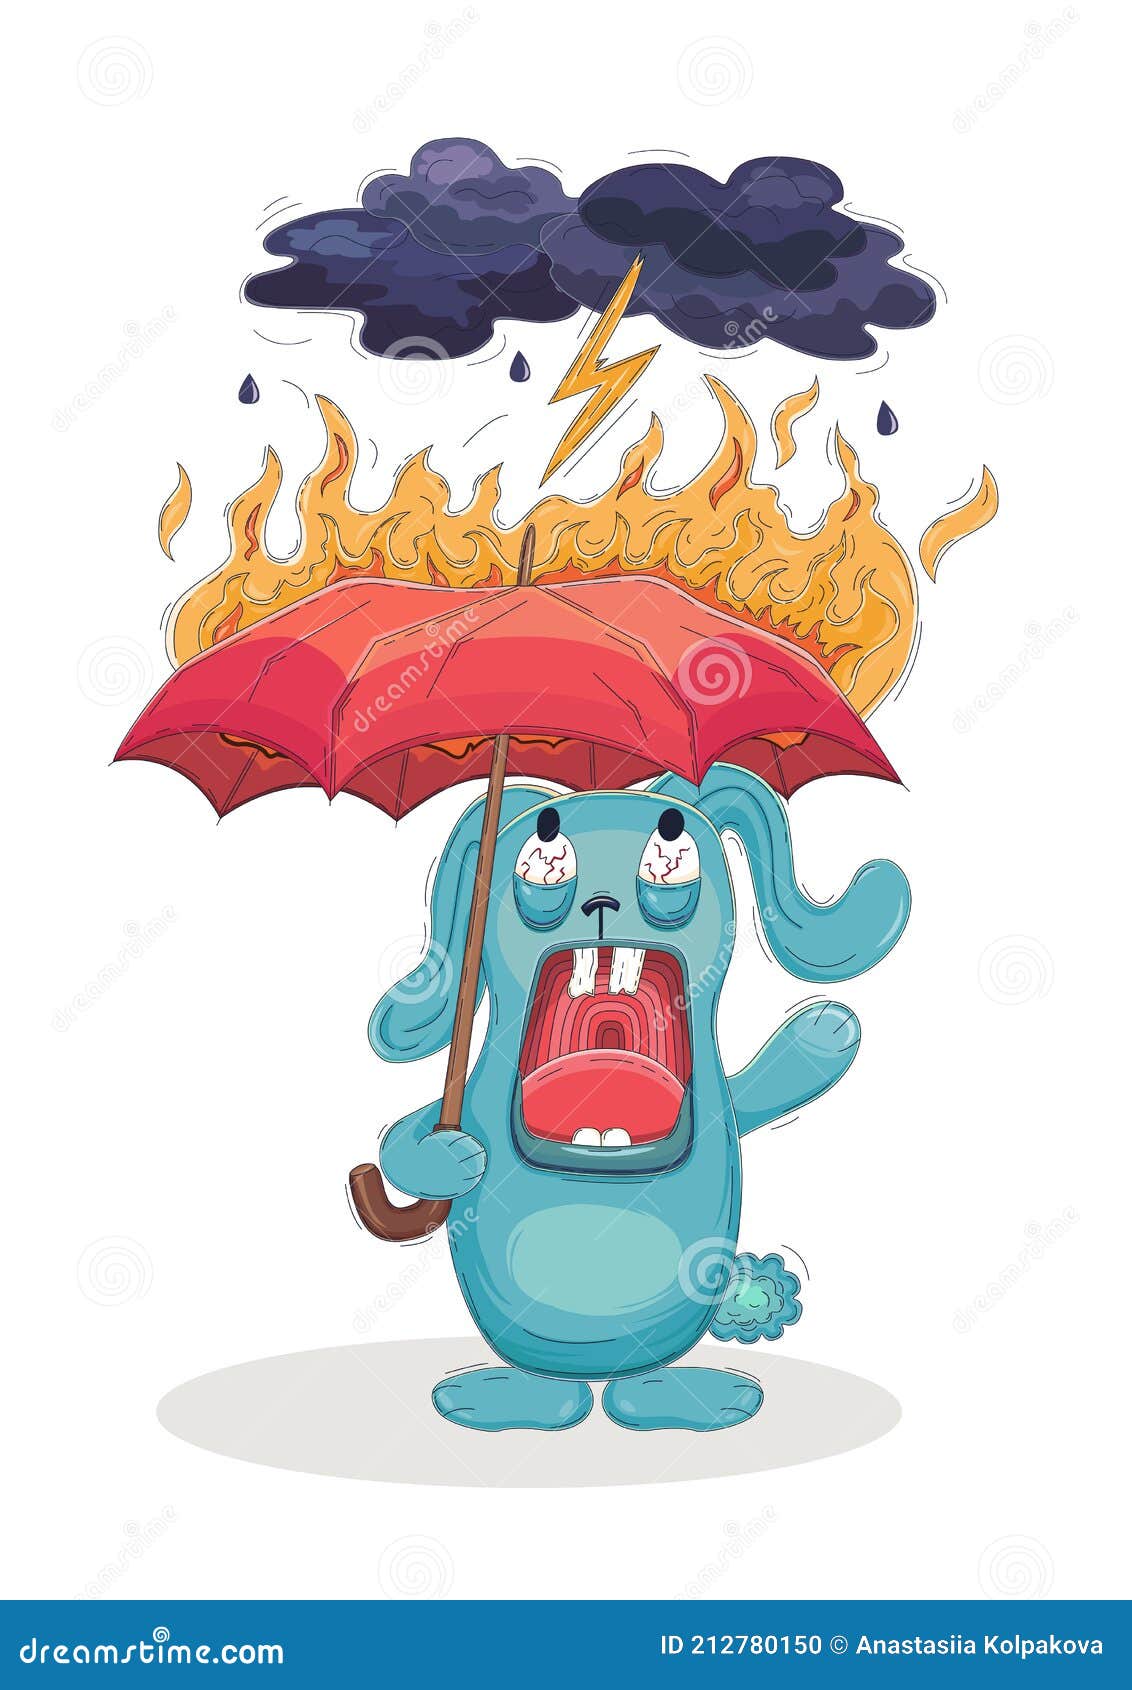 the cartoon blue rabbit screams and stands under a burning umbrella